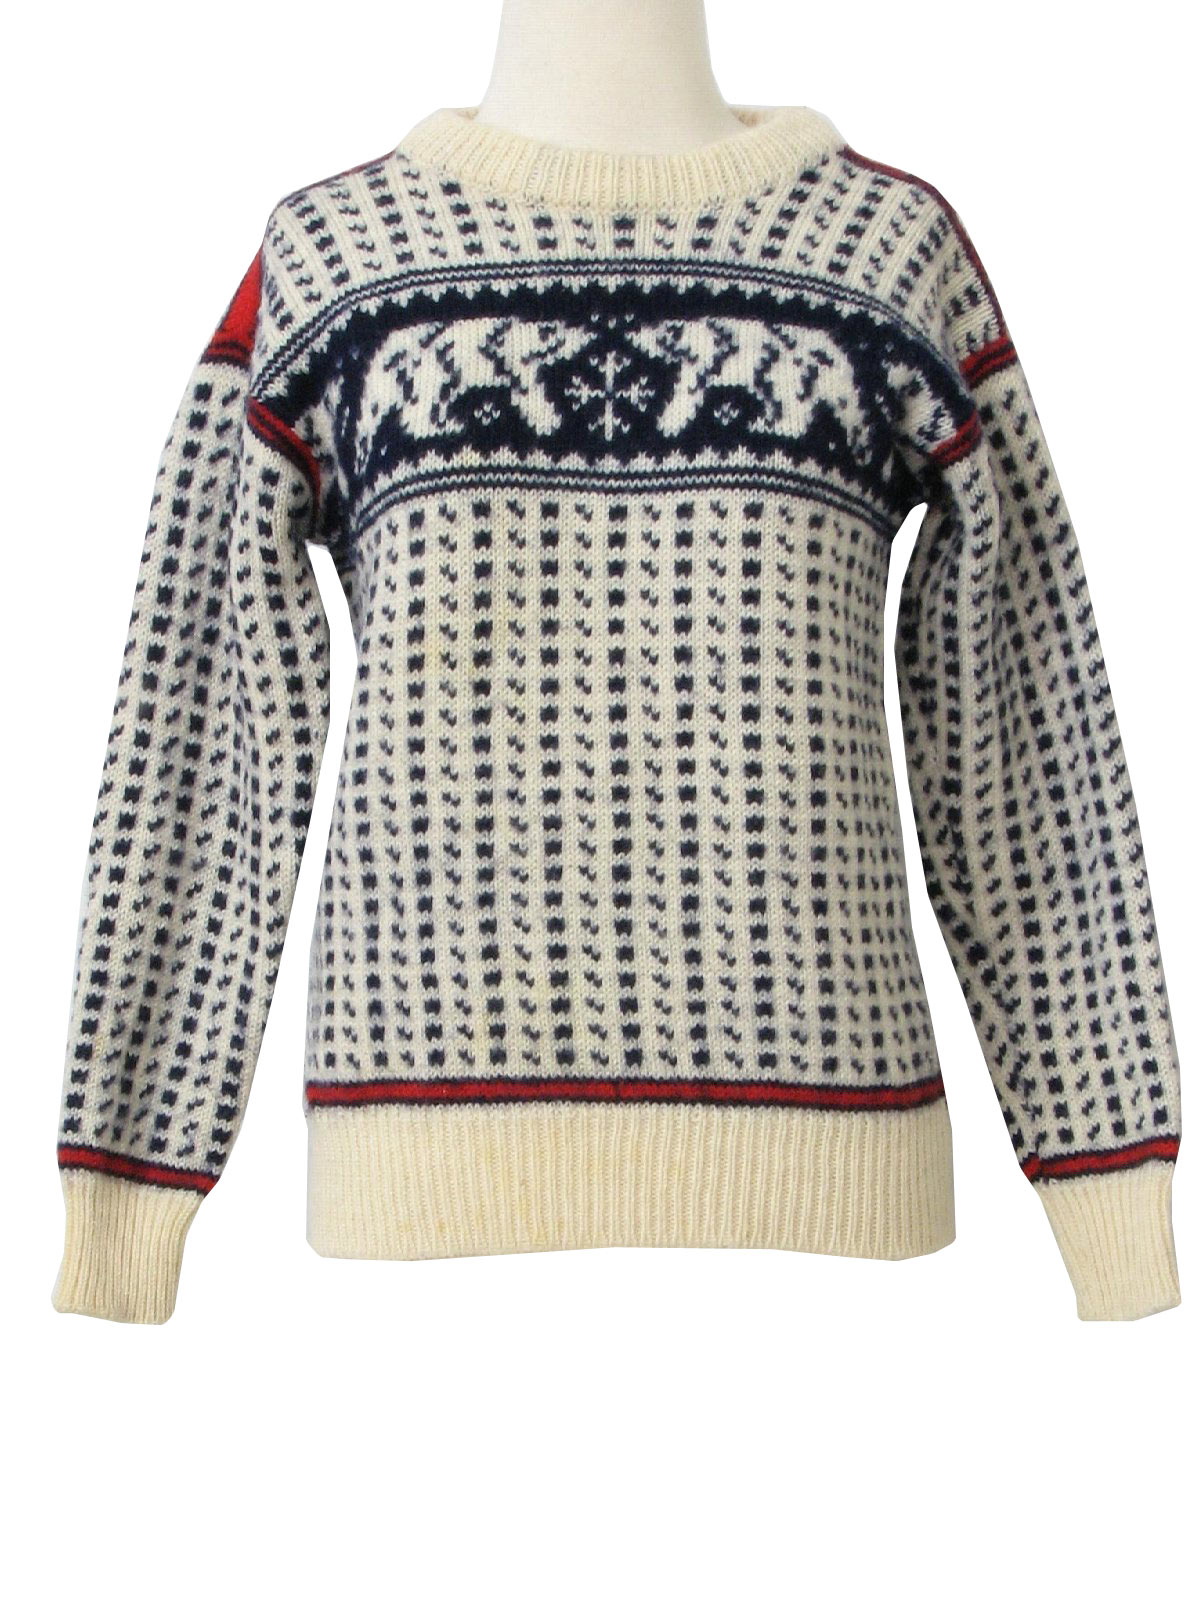 LL Bean Eighties Vintage Sweater: 80s -LL Bean- Womens or girls white ...